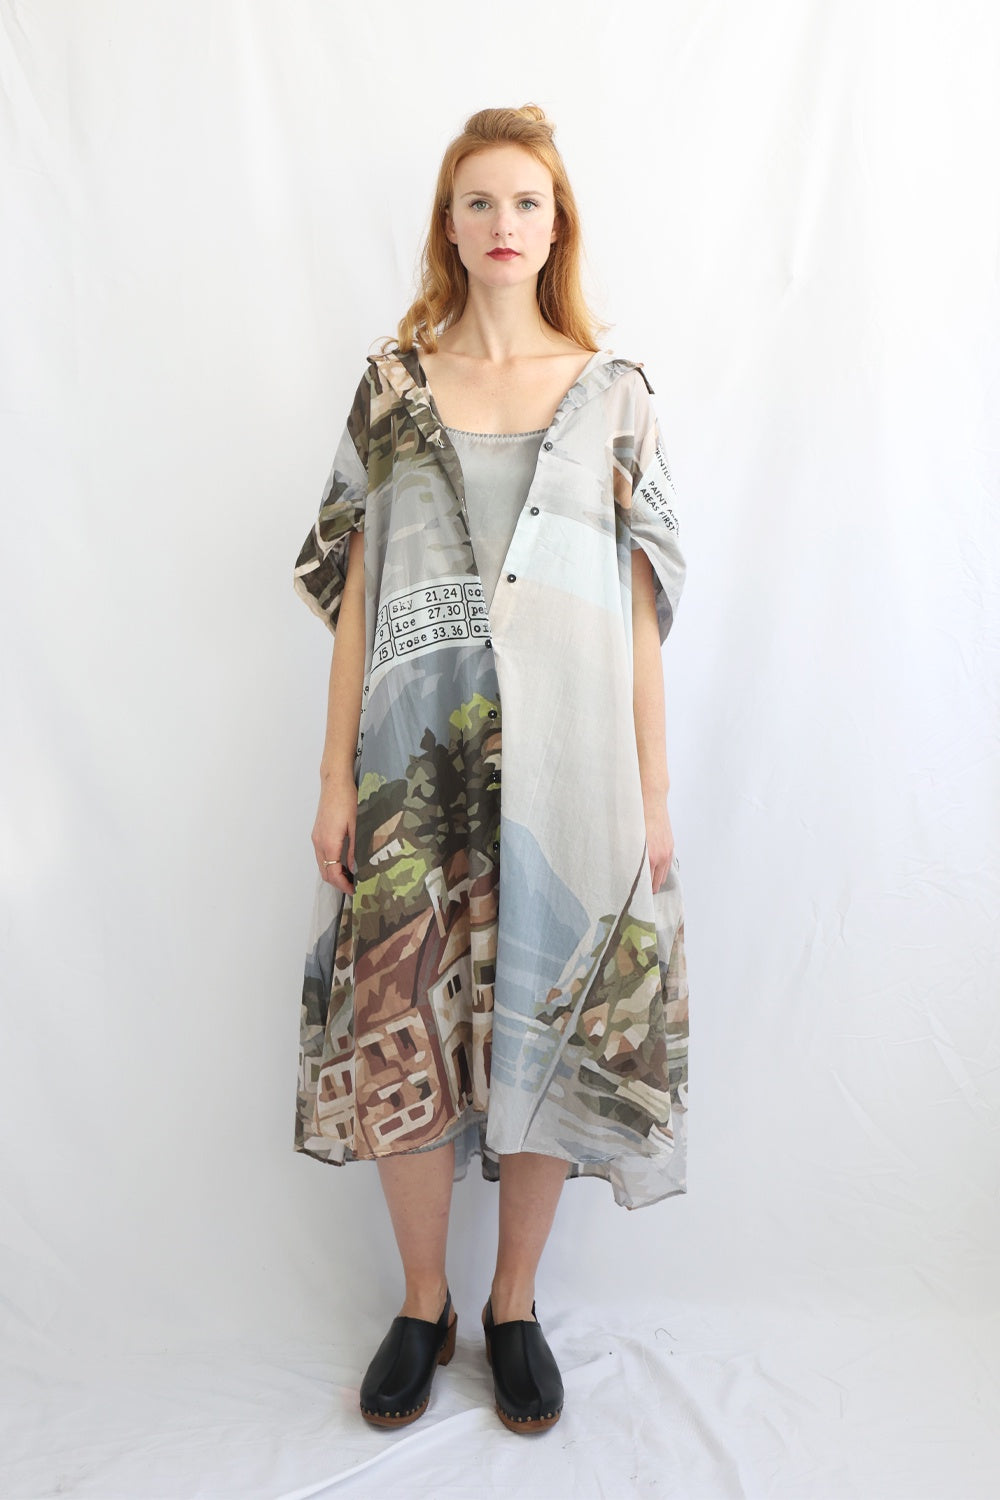 RUBY One Shoulder Dress Silk – The Linen Atelier